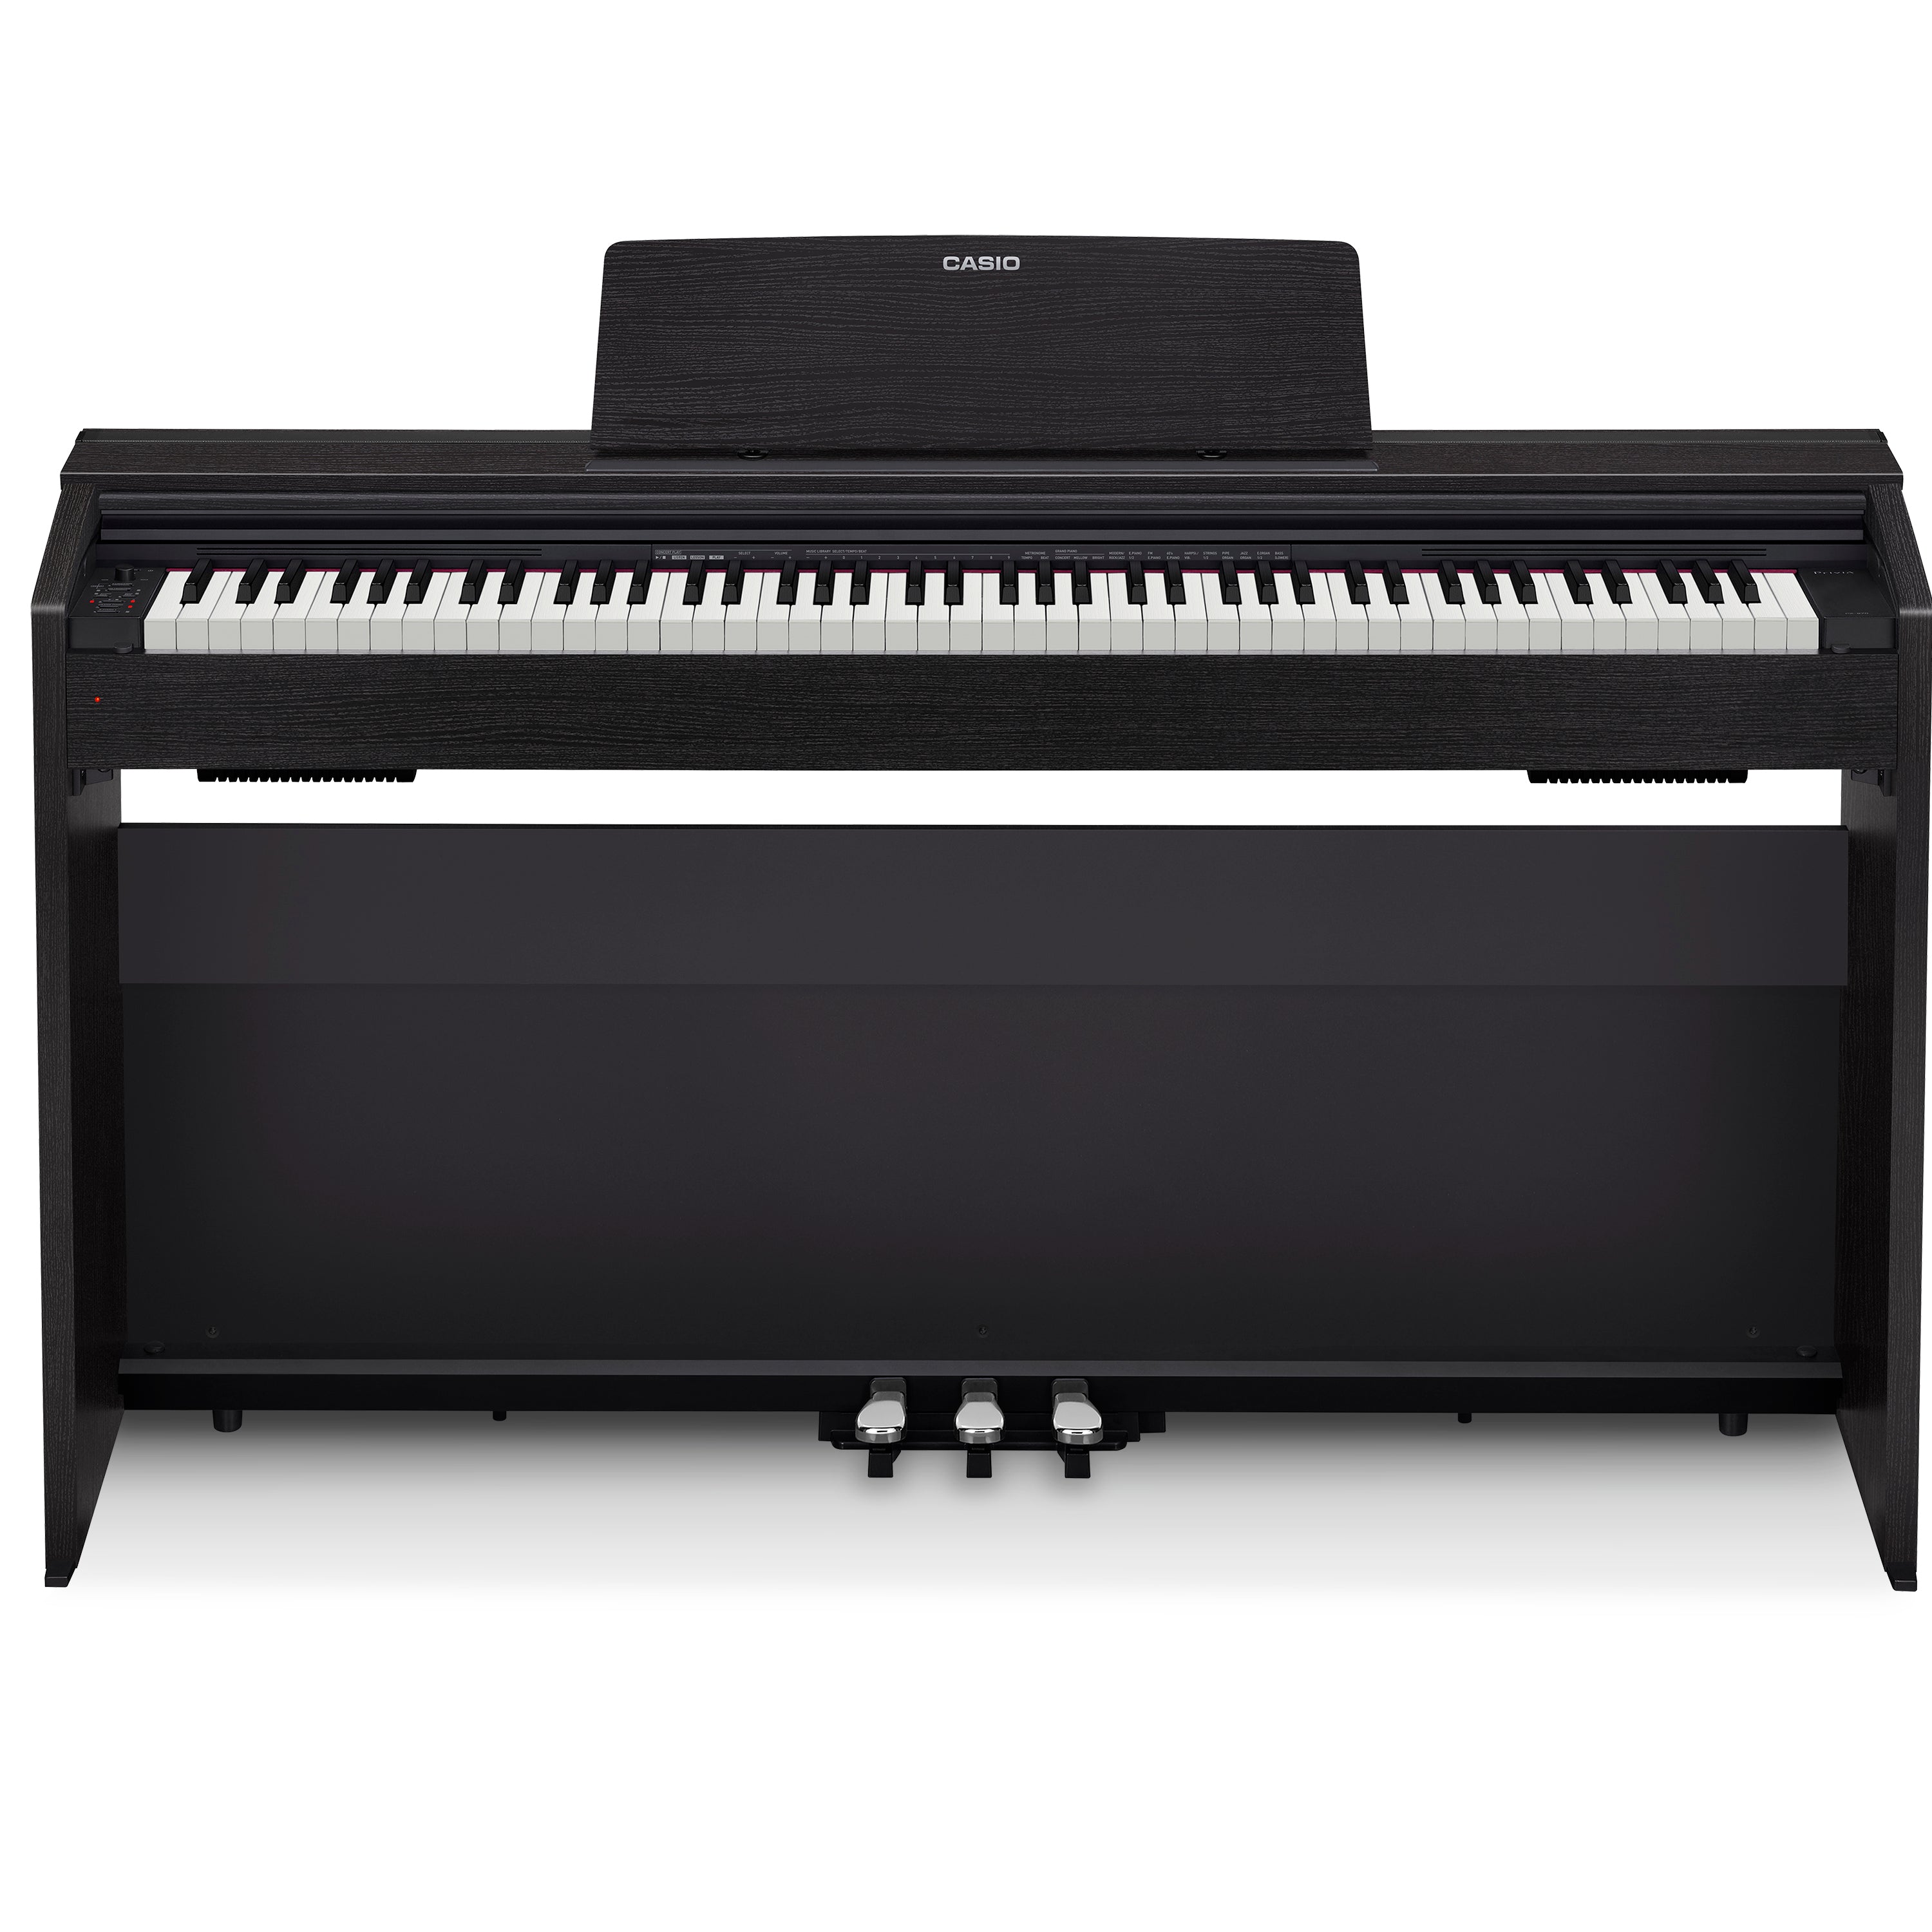 Casio Privia PX-870 Digital Piano - Black COMPLETE HOME BUNDLE